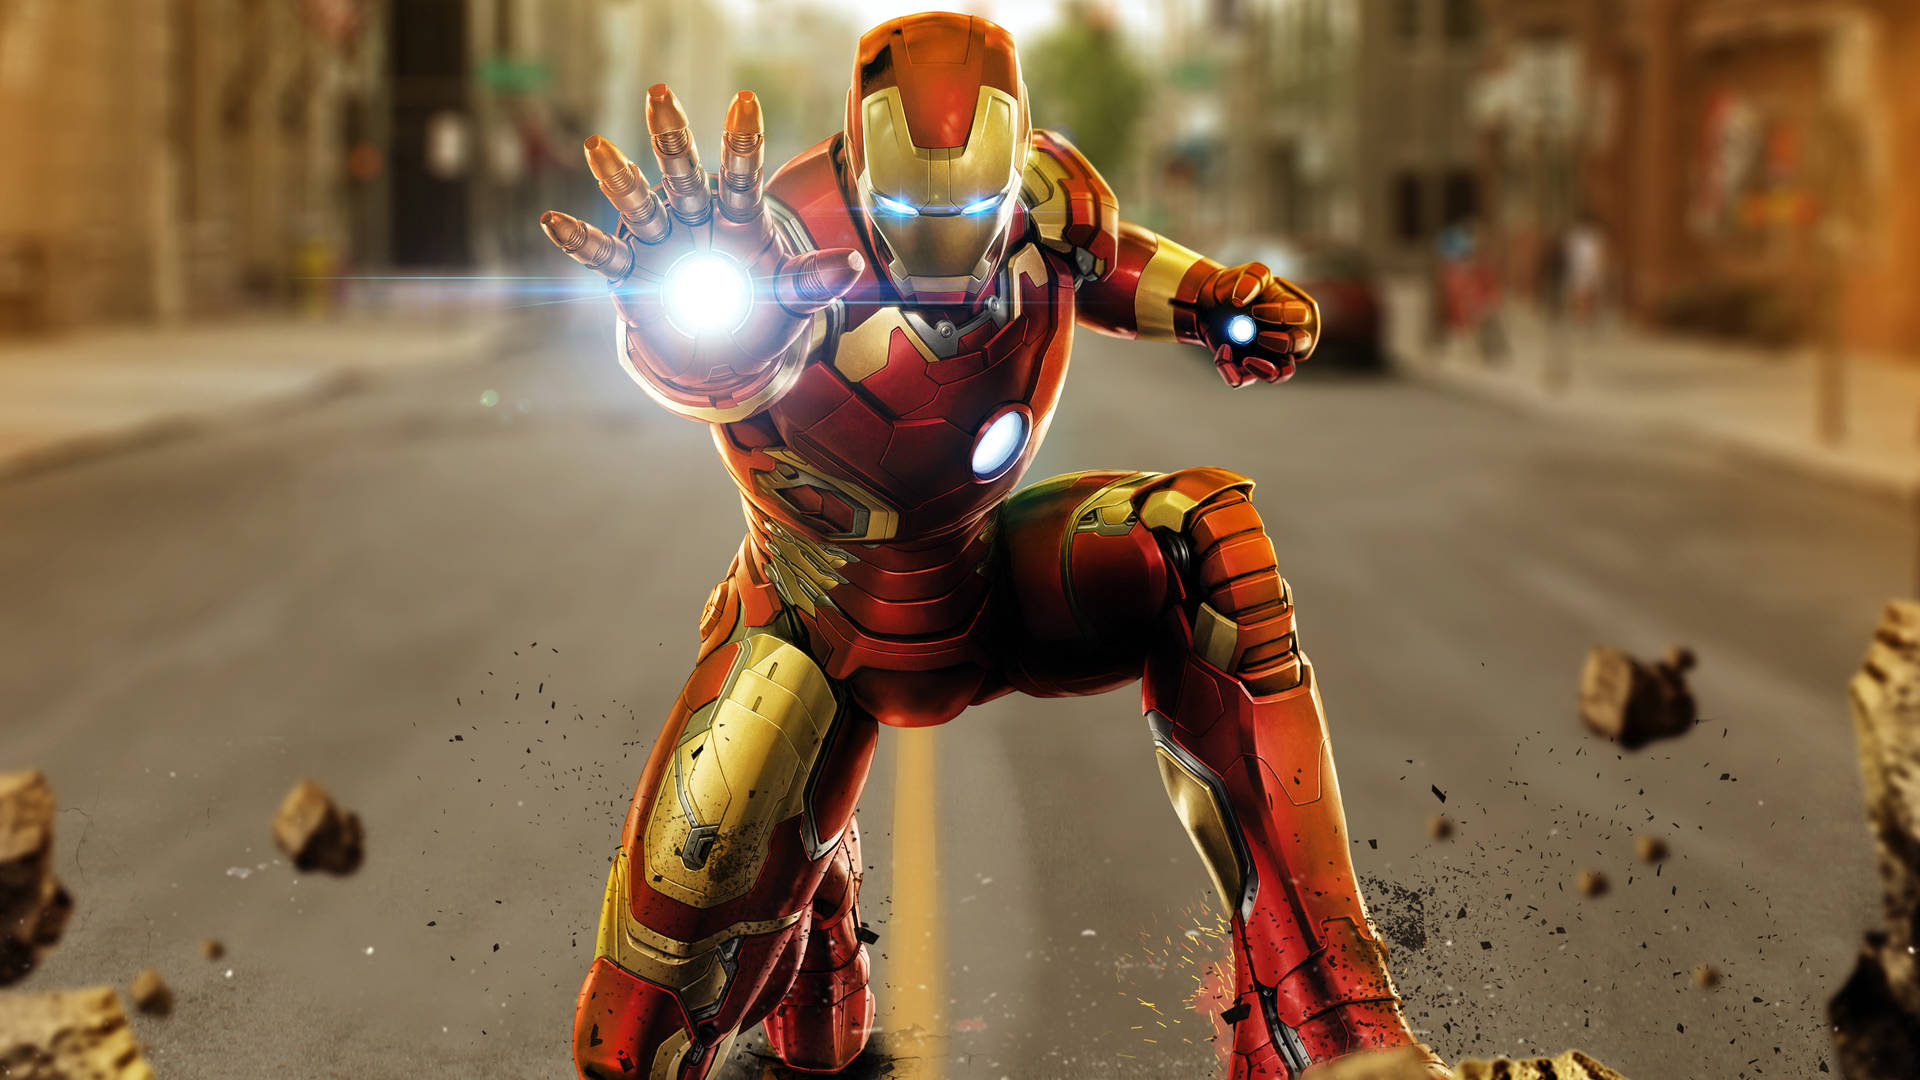 Cool Iron Man Repulsor Blast Background